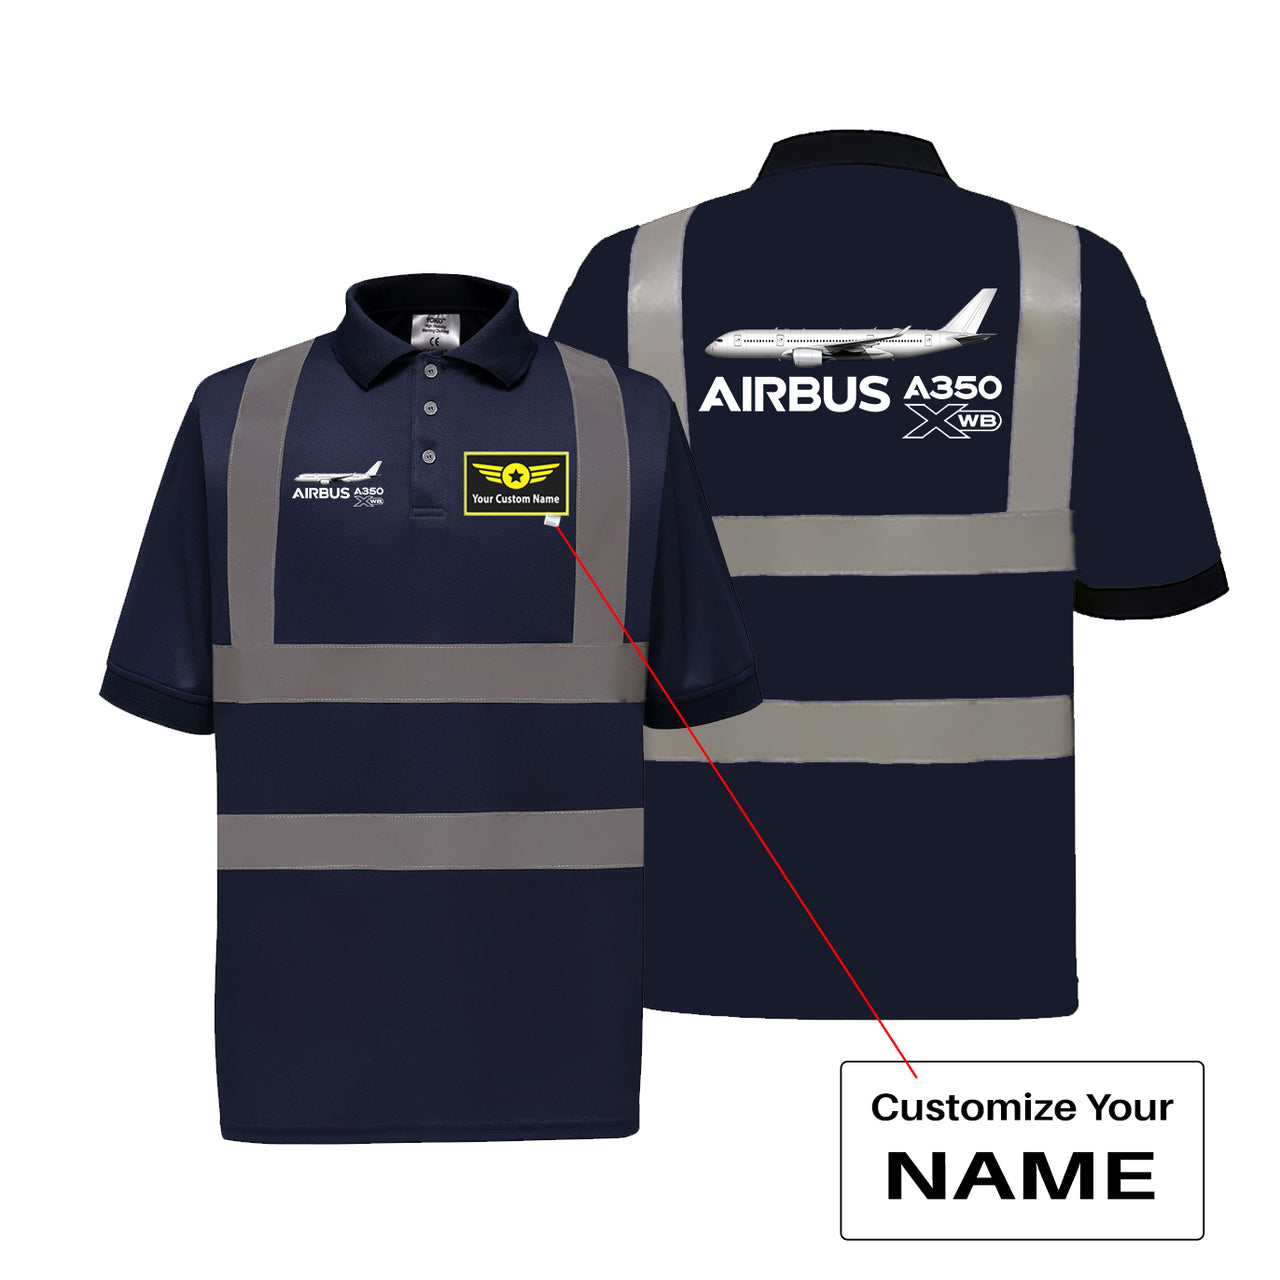 The Airbus A350 WXB Designed Reflective Polo T-Shirts